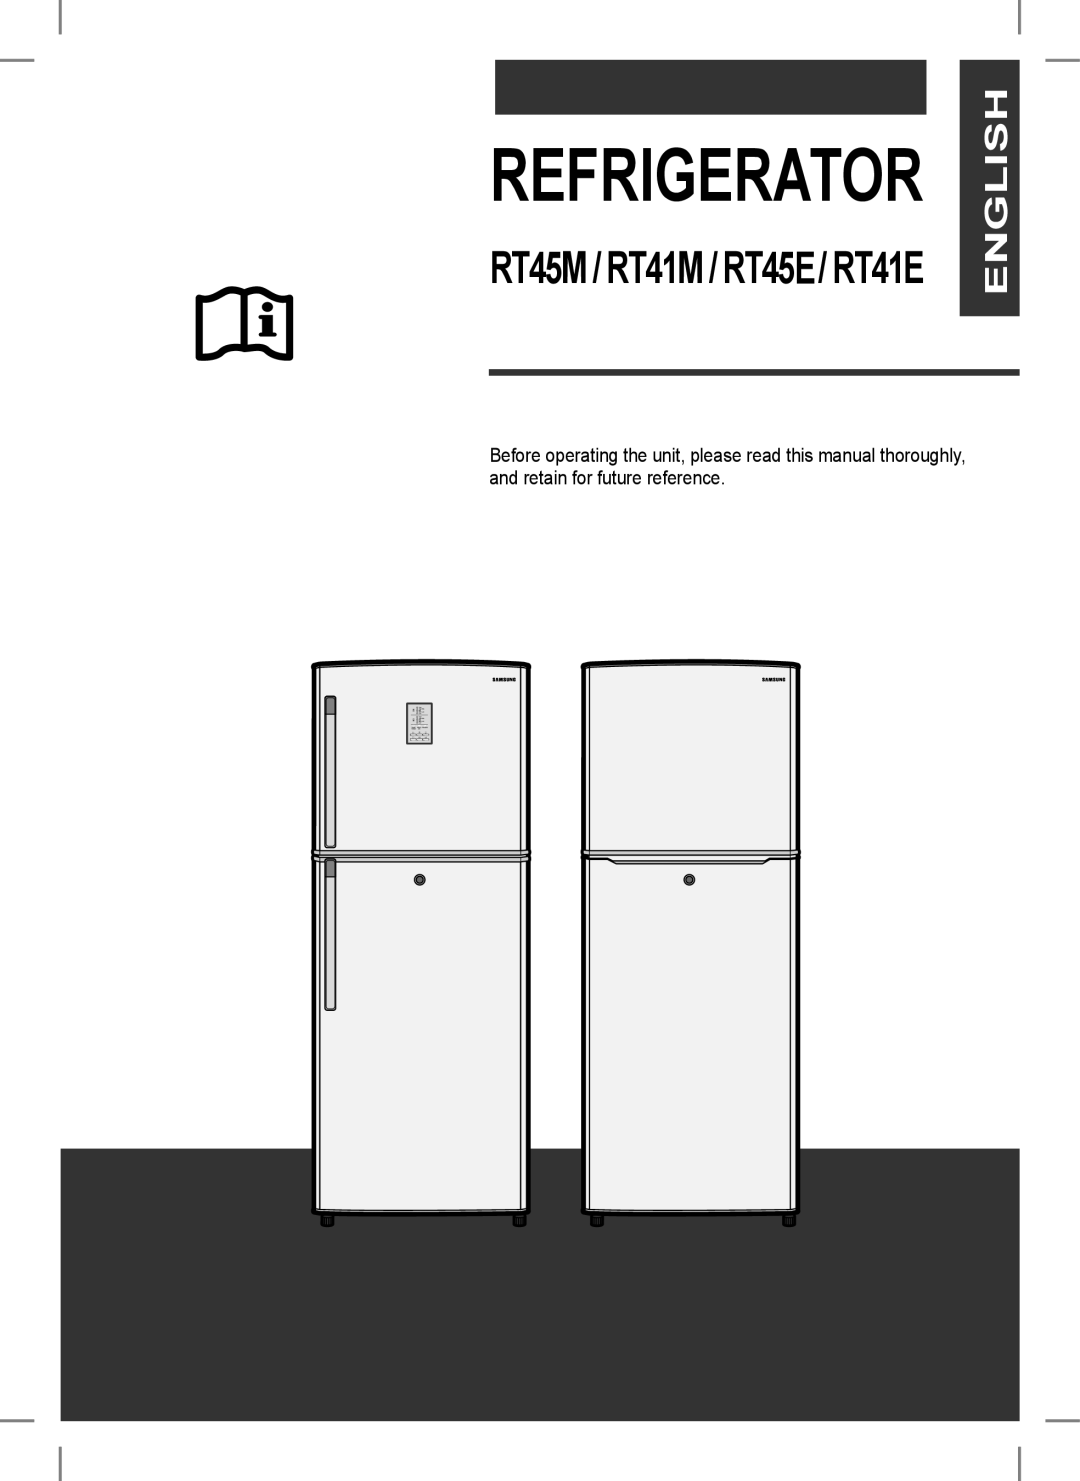 Samsung manual RT45M/RT41M/RT45E/RT41E, Refrigerator, English 